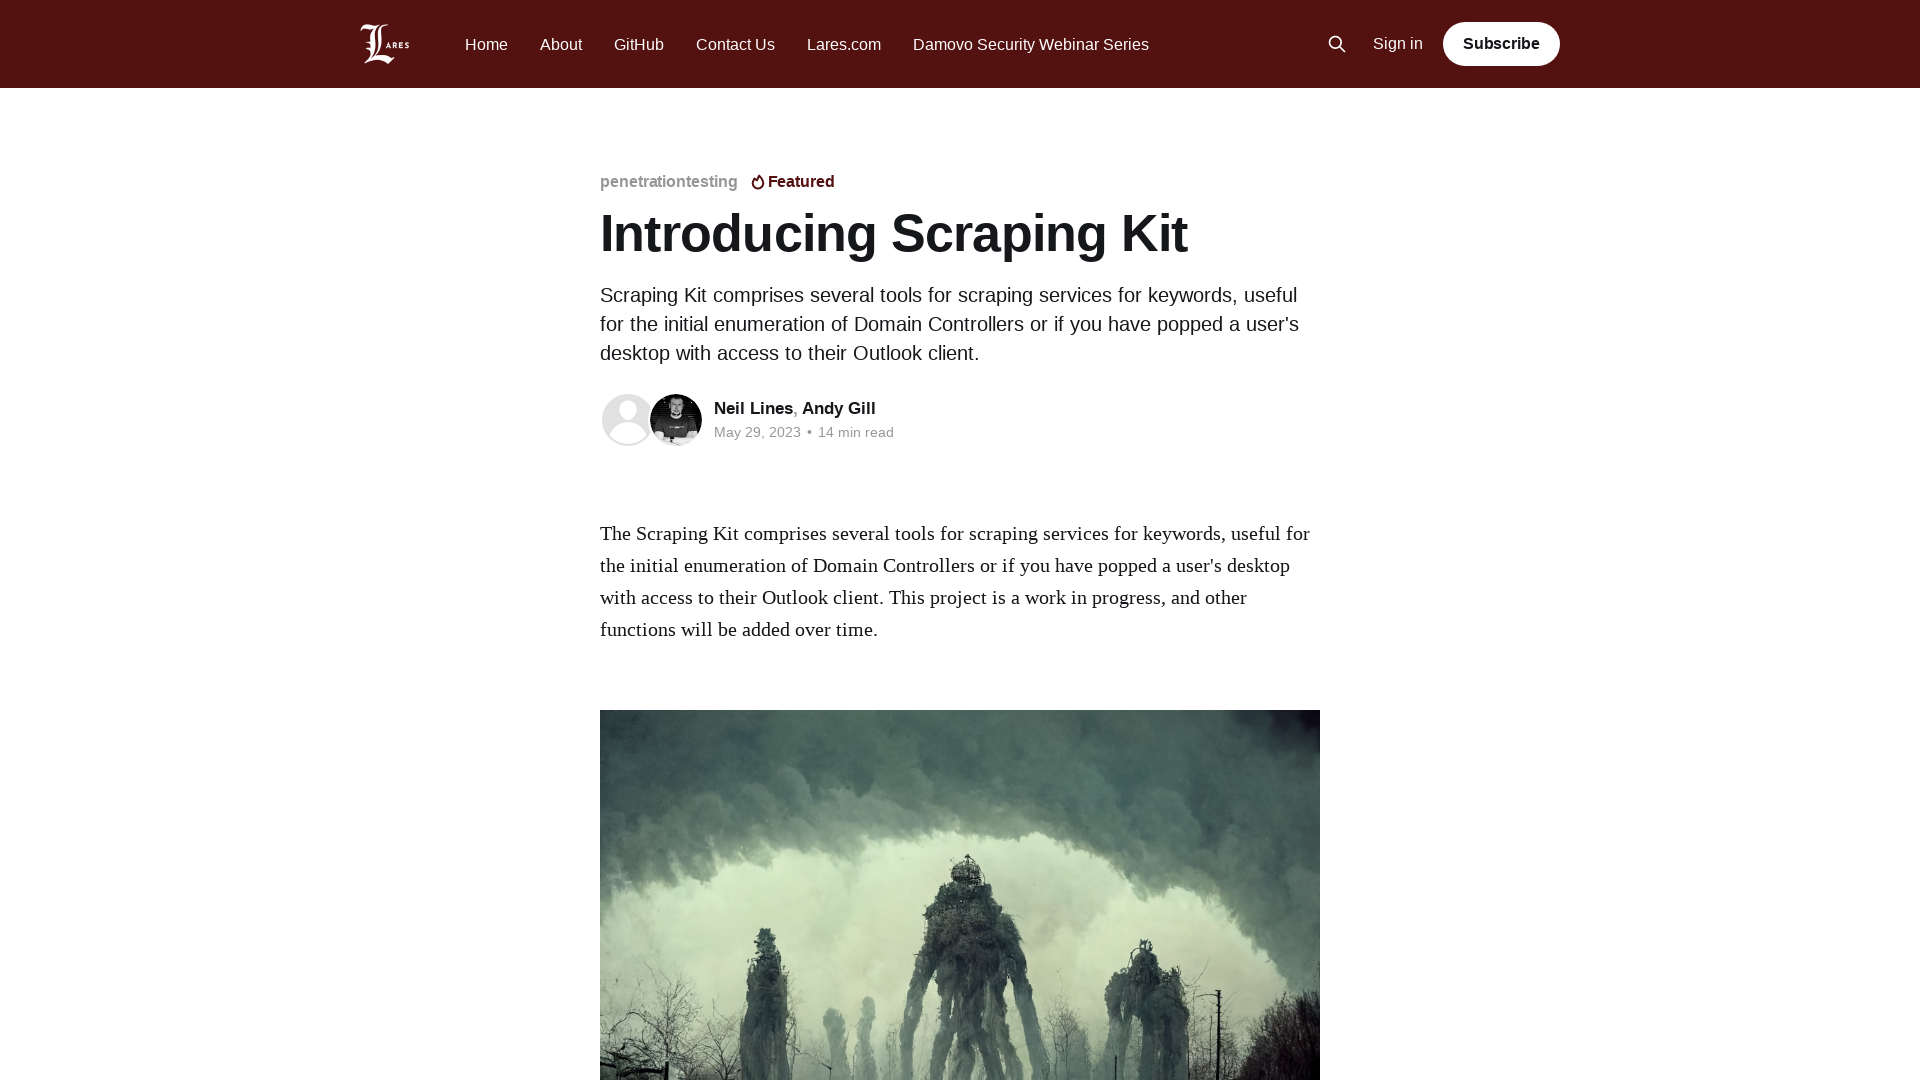 Introducing Scraping Kit